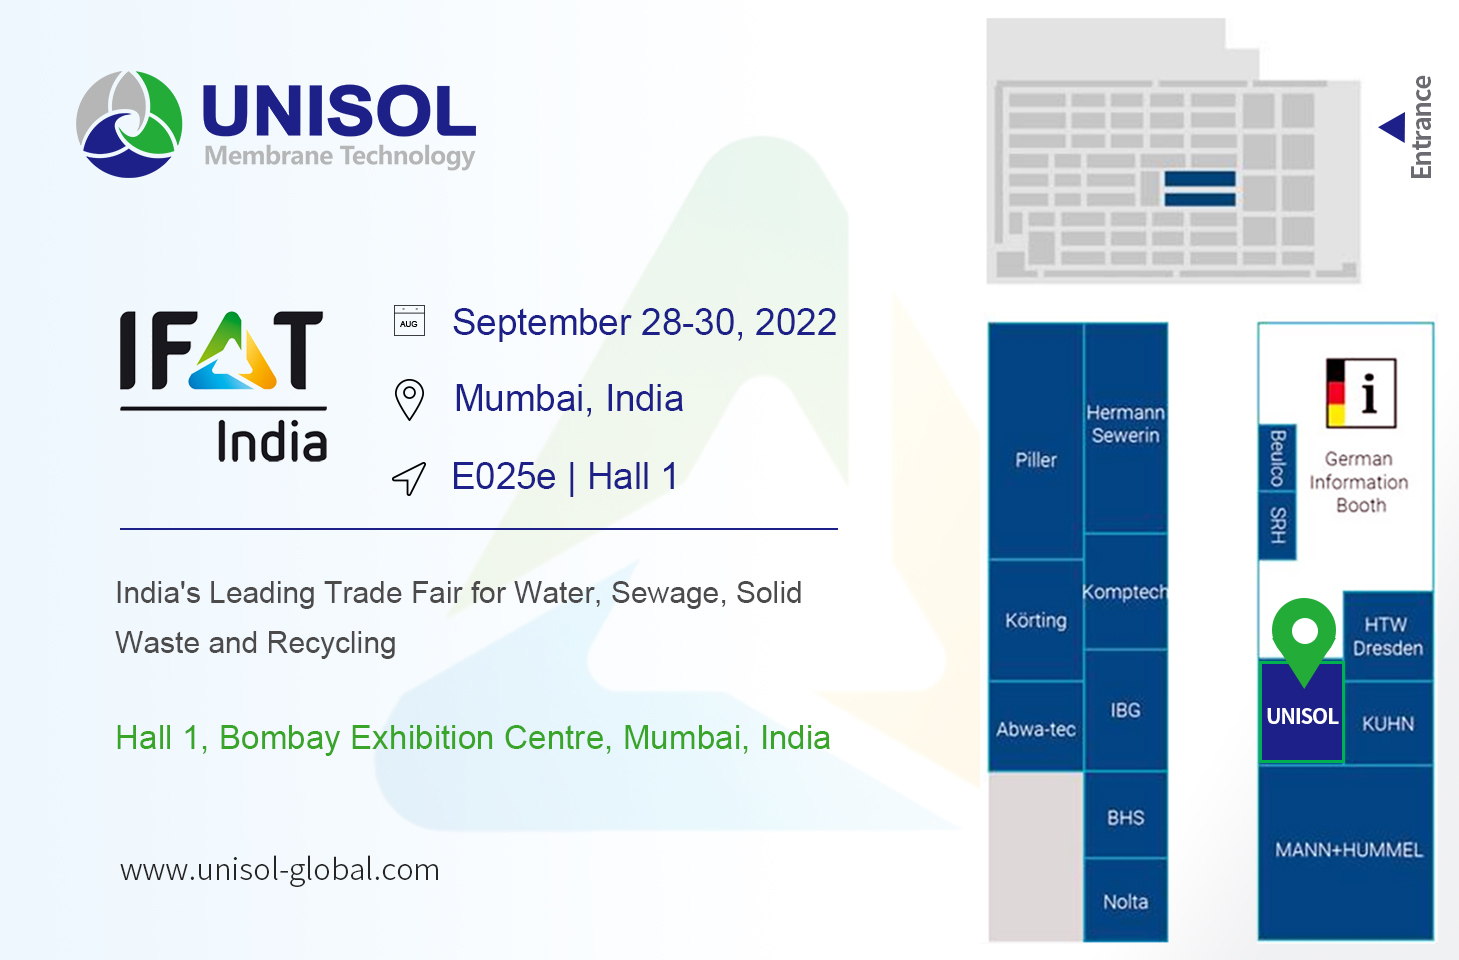 UNISOL membrane technology invitation for IFAT India 2022